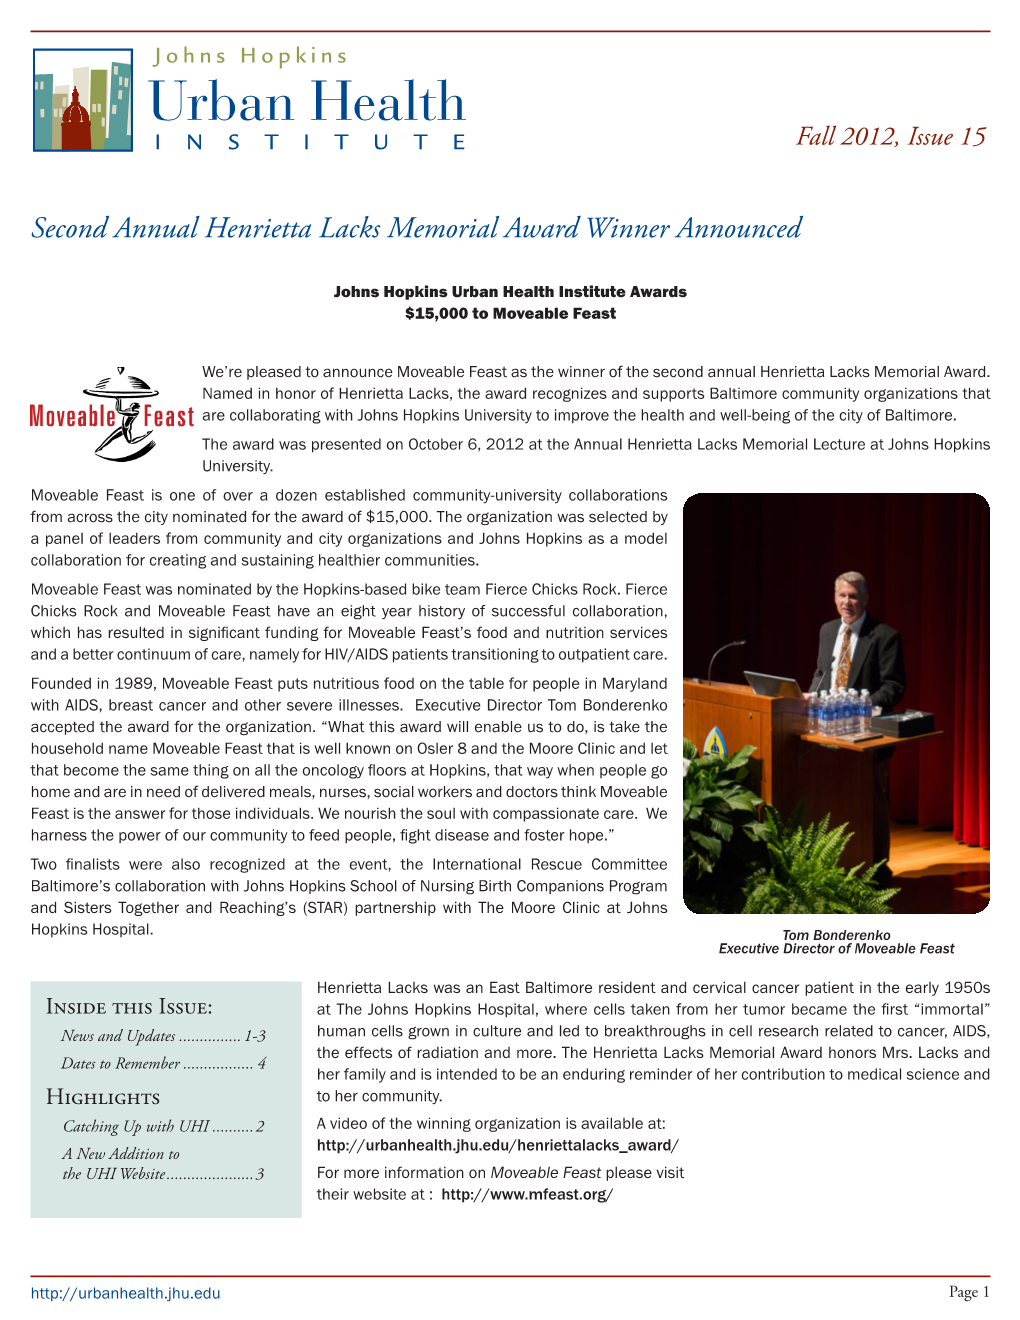 Second Annual Henrietta Lacks Memorial Award Winner Announced